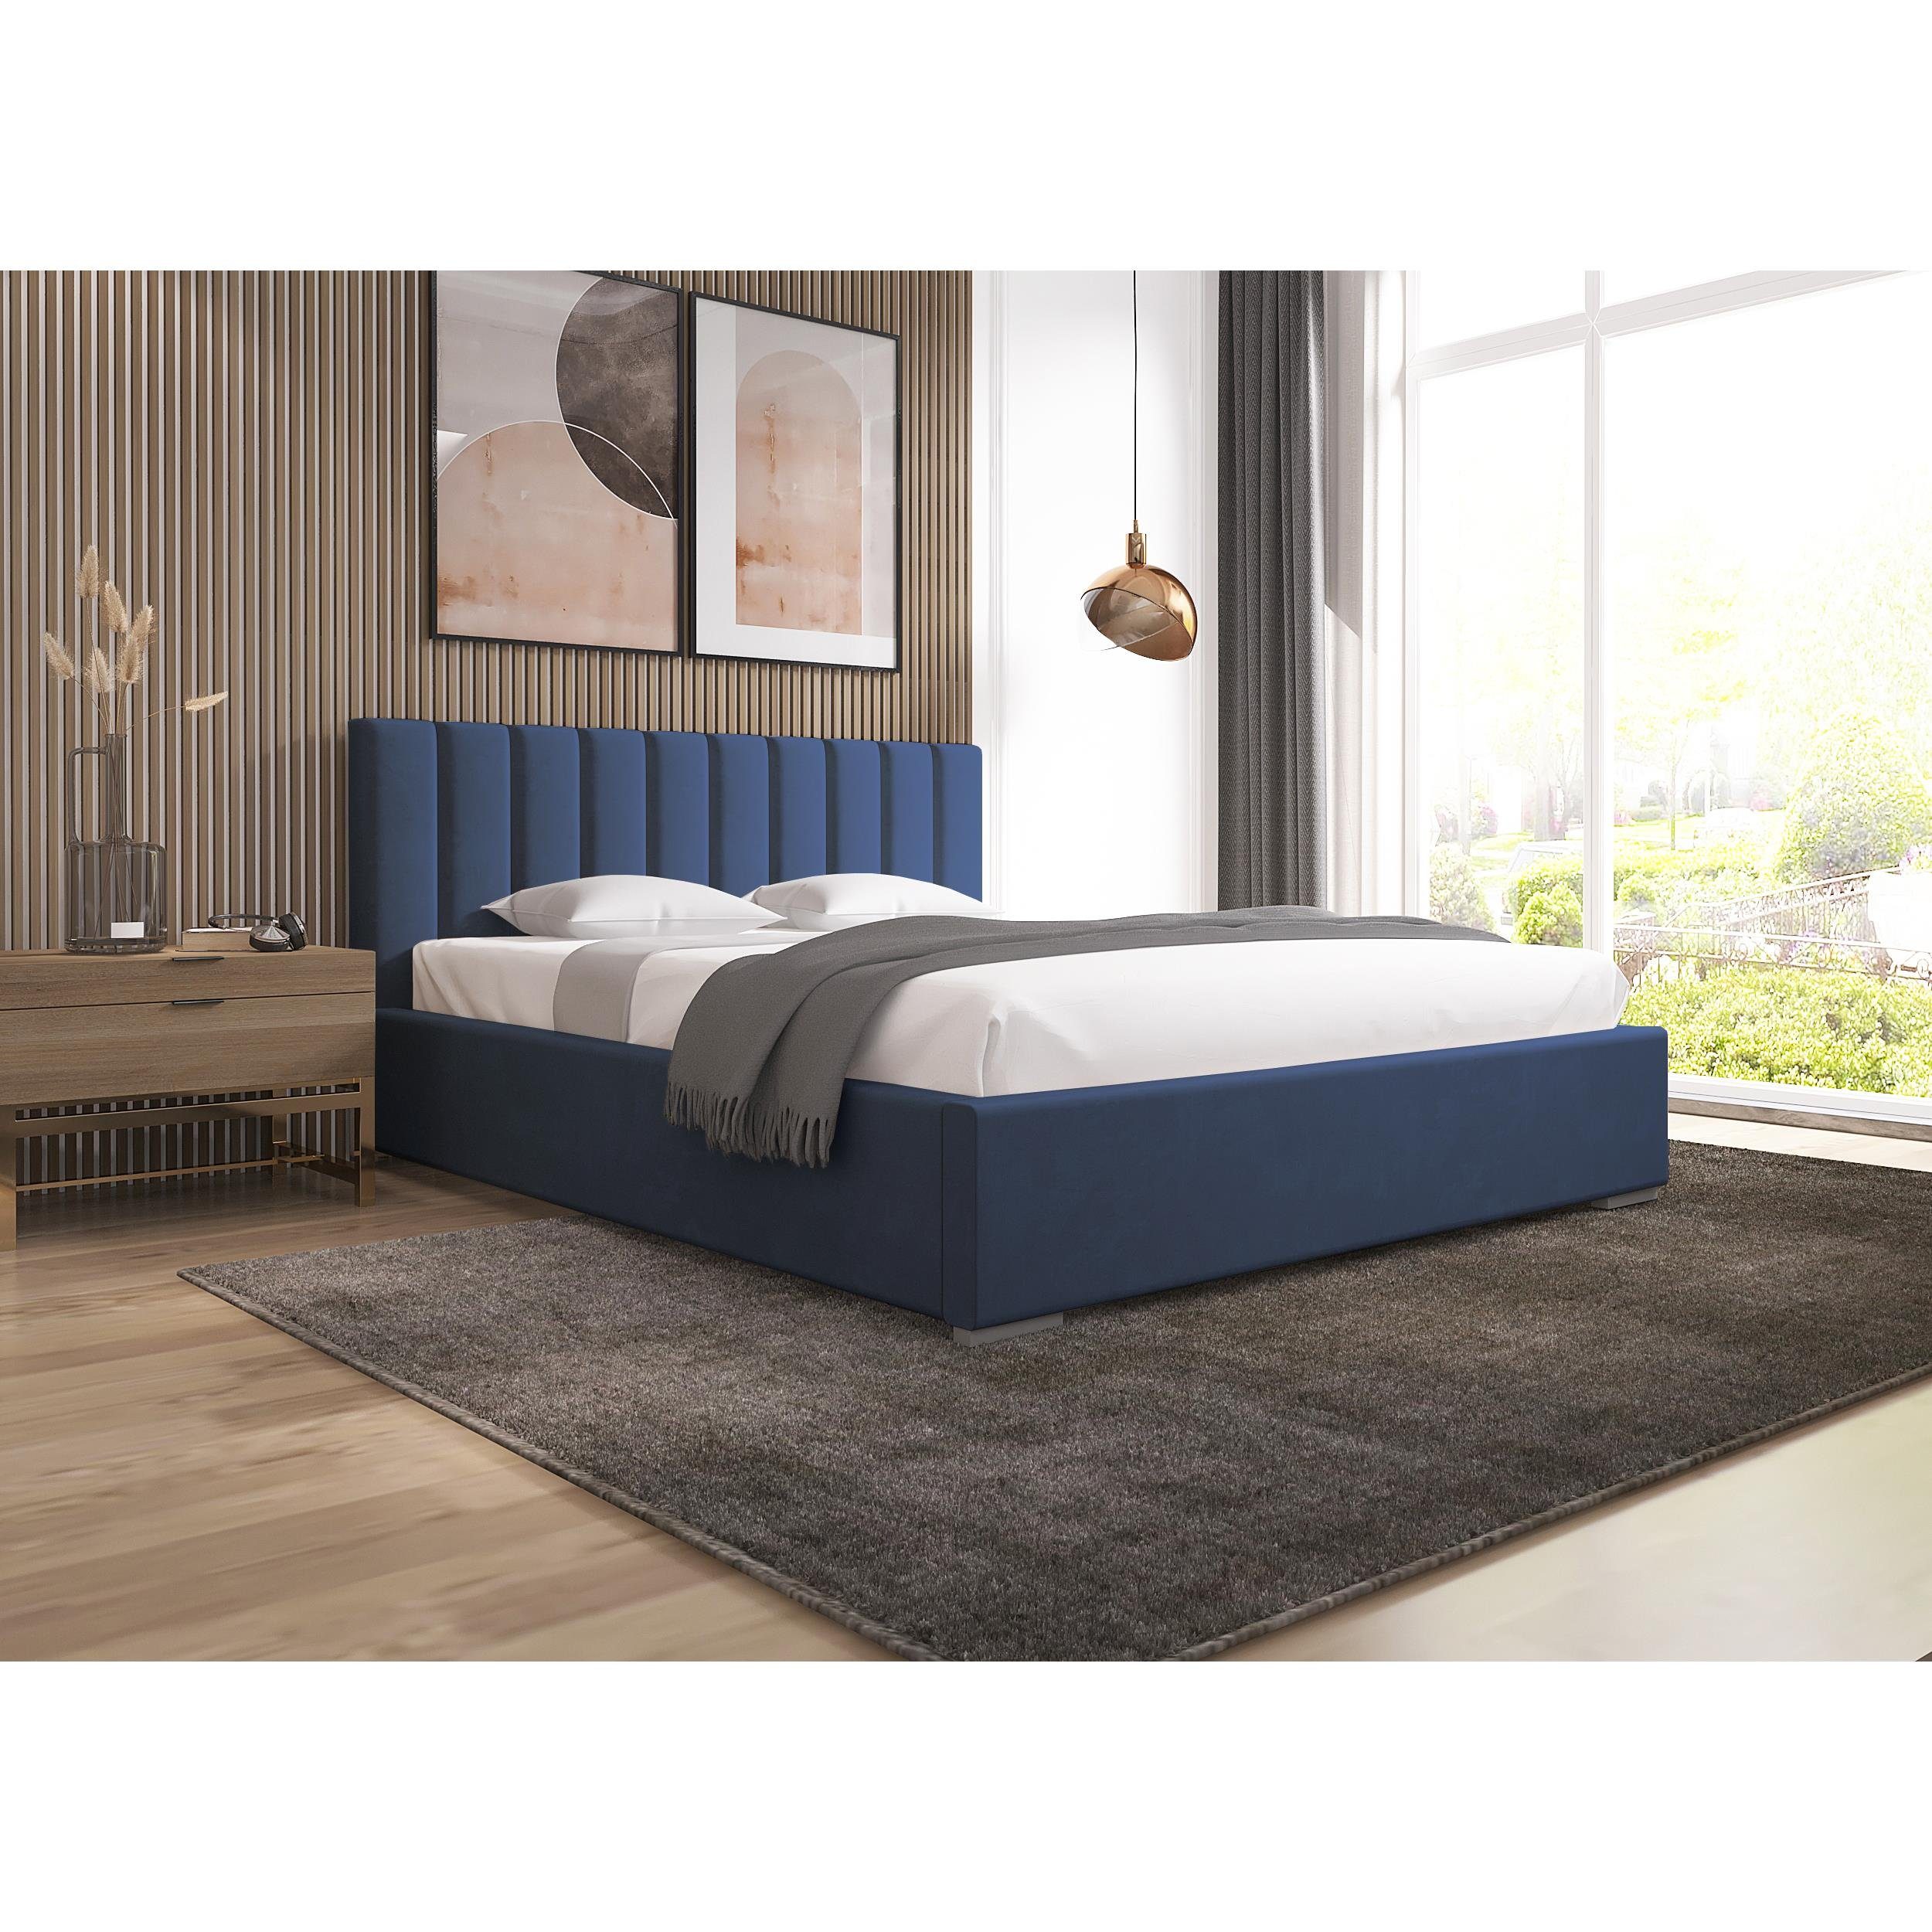 Beautysofa Polsterbett Adeline (stilvoll Bett mit Velvet-Bezug, Beige Polsterbett 120 x 200 cm), mit Bettkasten, mit Holzgestell Blau (mono 242) | Polsterbetten